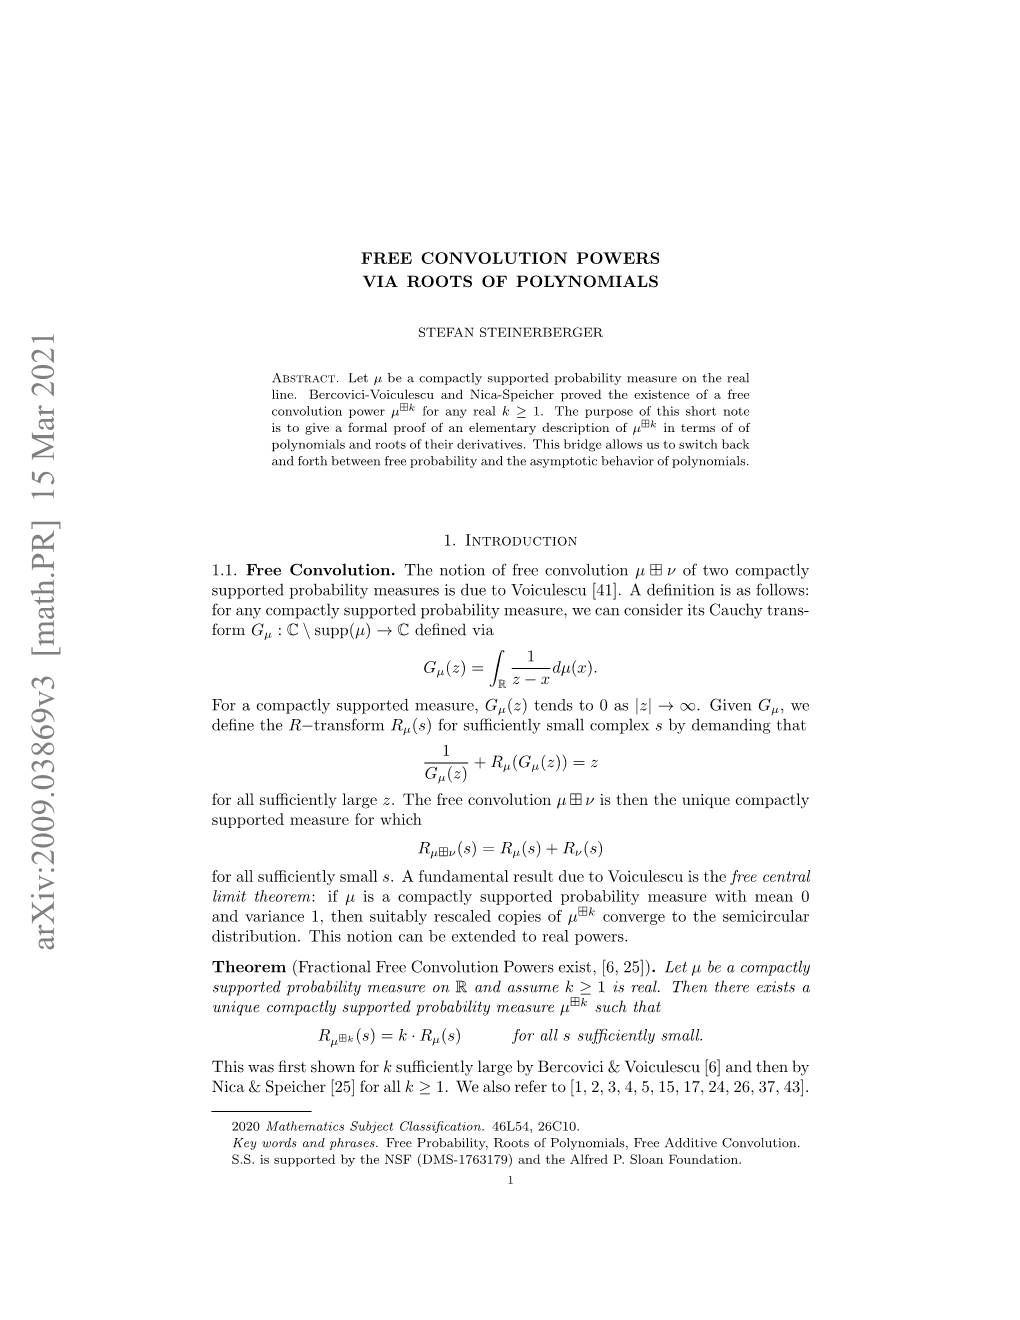 Arxiv:2009.03869V3 [Math.PR] 15 Mar 2021 Theorem (Fractional Free Convolution Powers Exist, [6, 25])